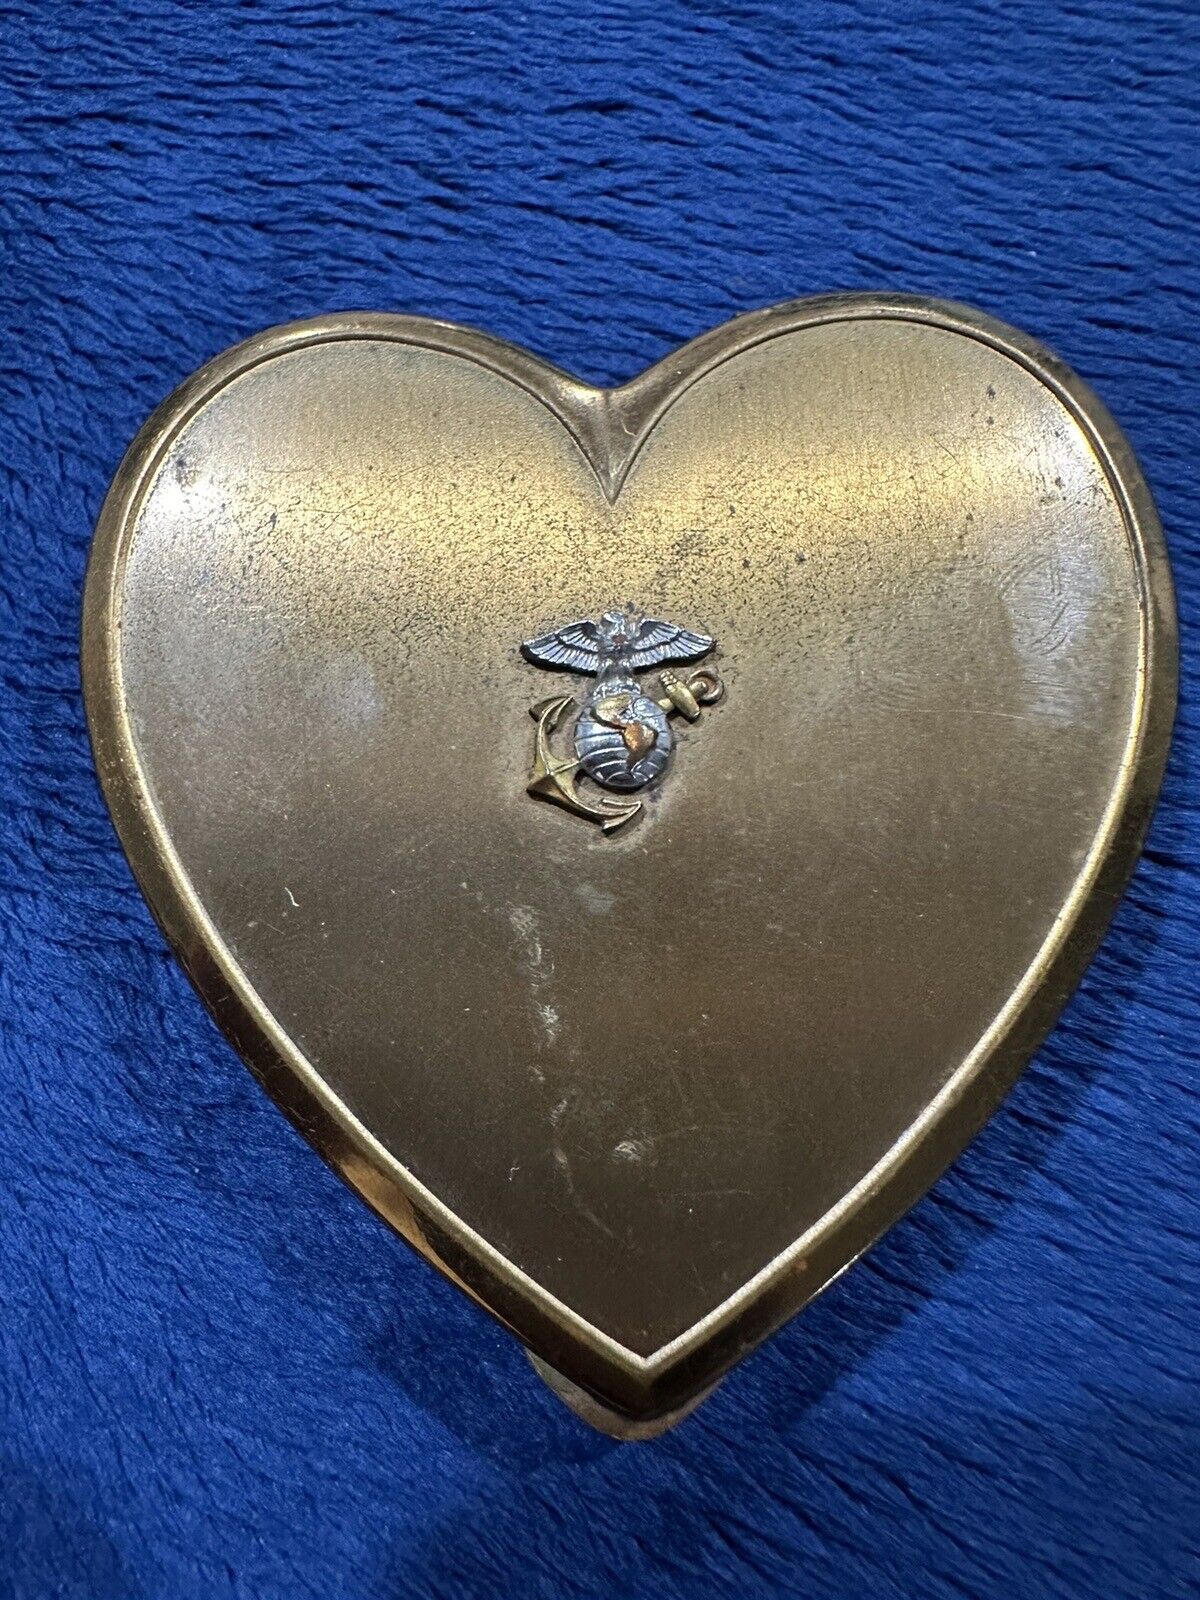 VTG WWII Era MARINE Sweetheart  Love HEART SHAPED GOLD COMPACT, 2.75x3in